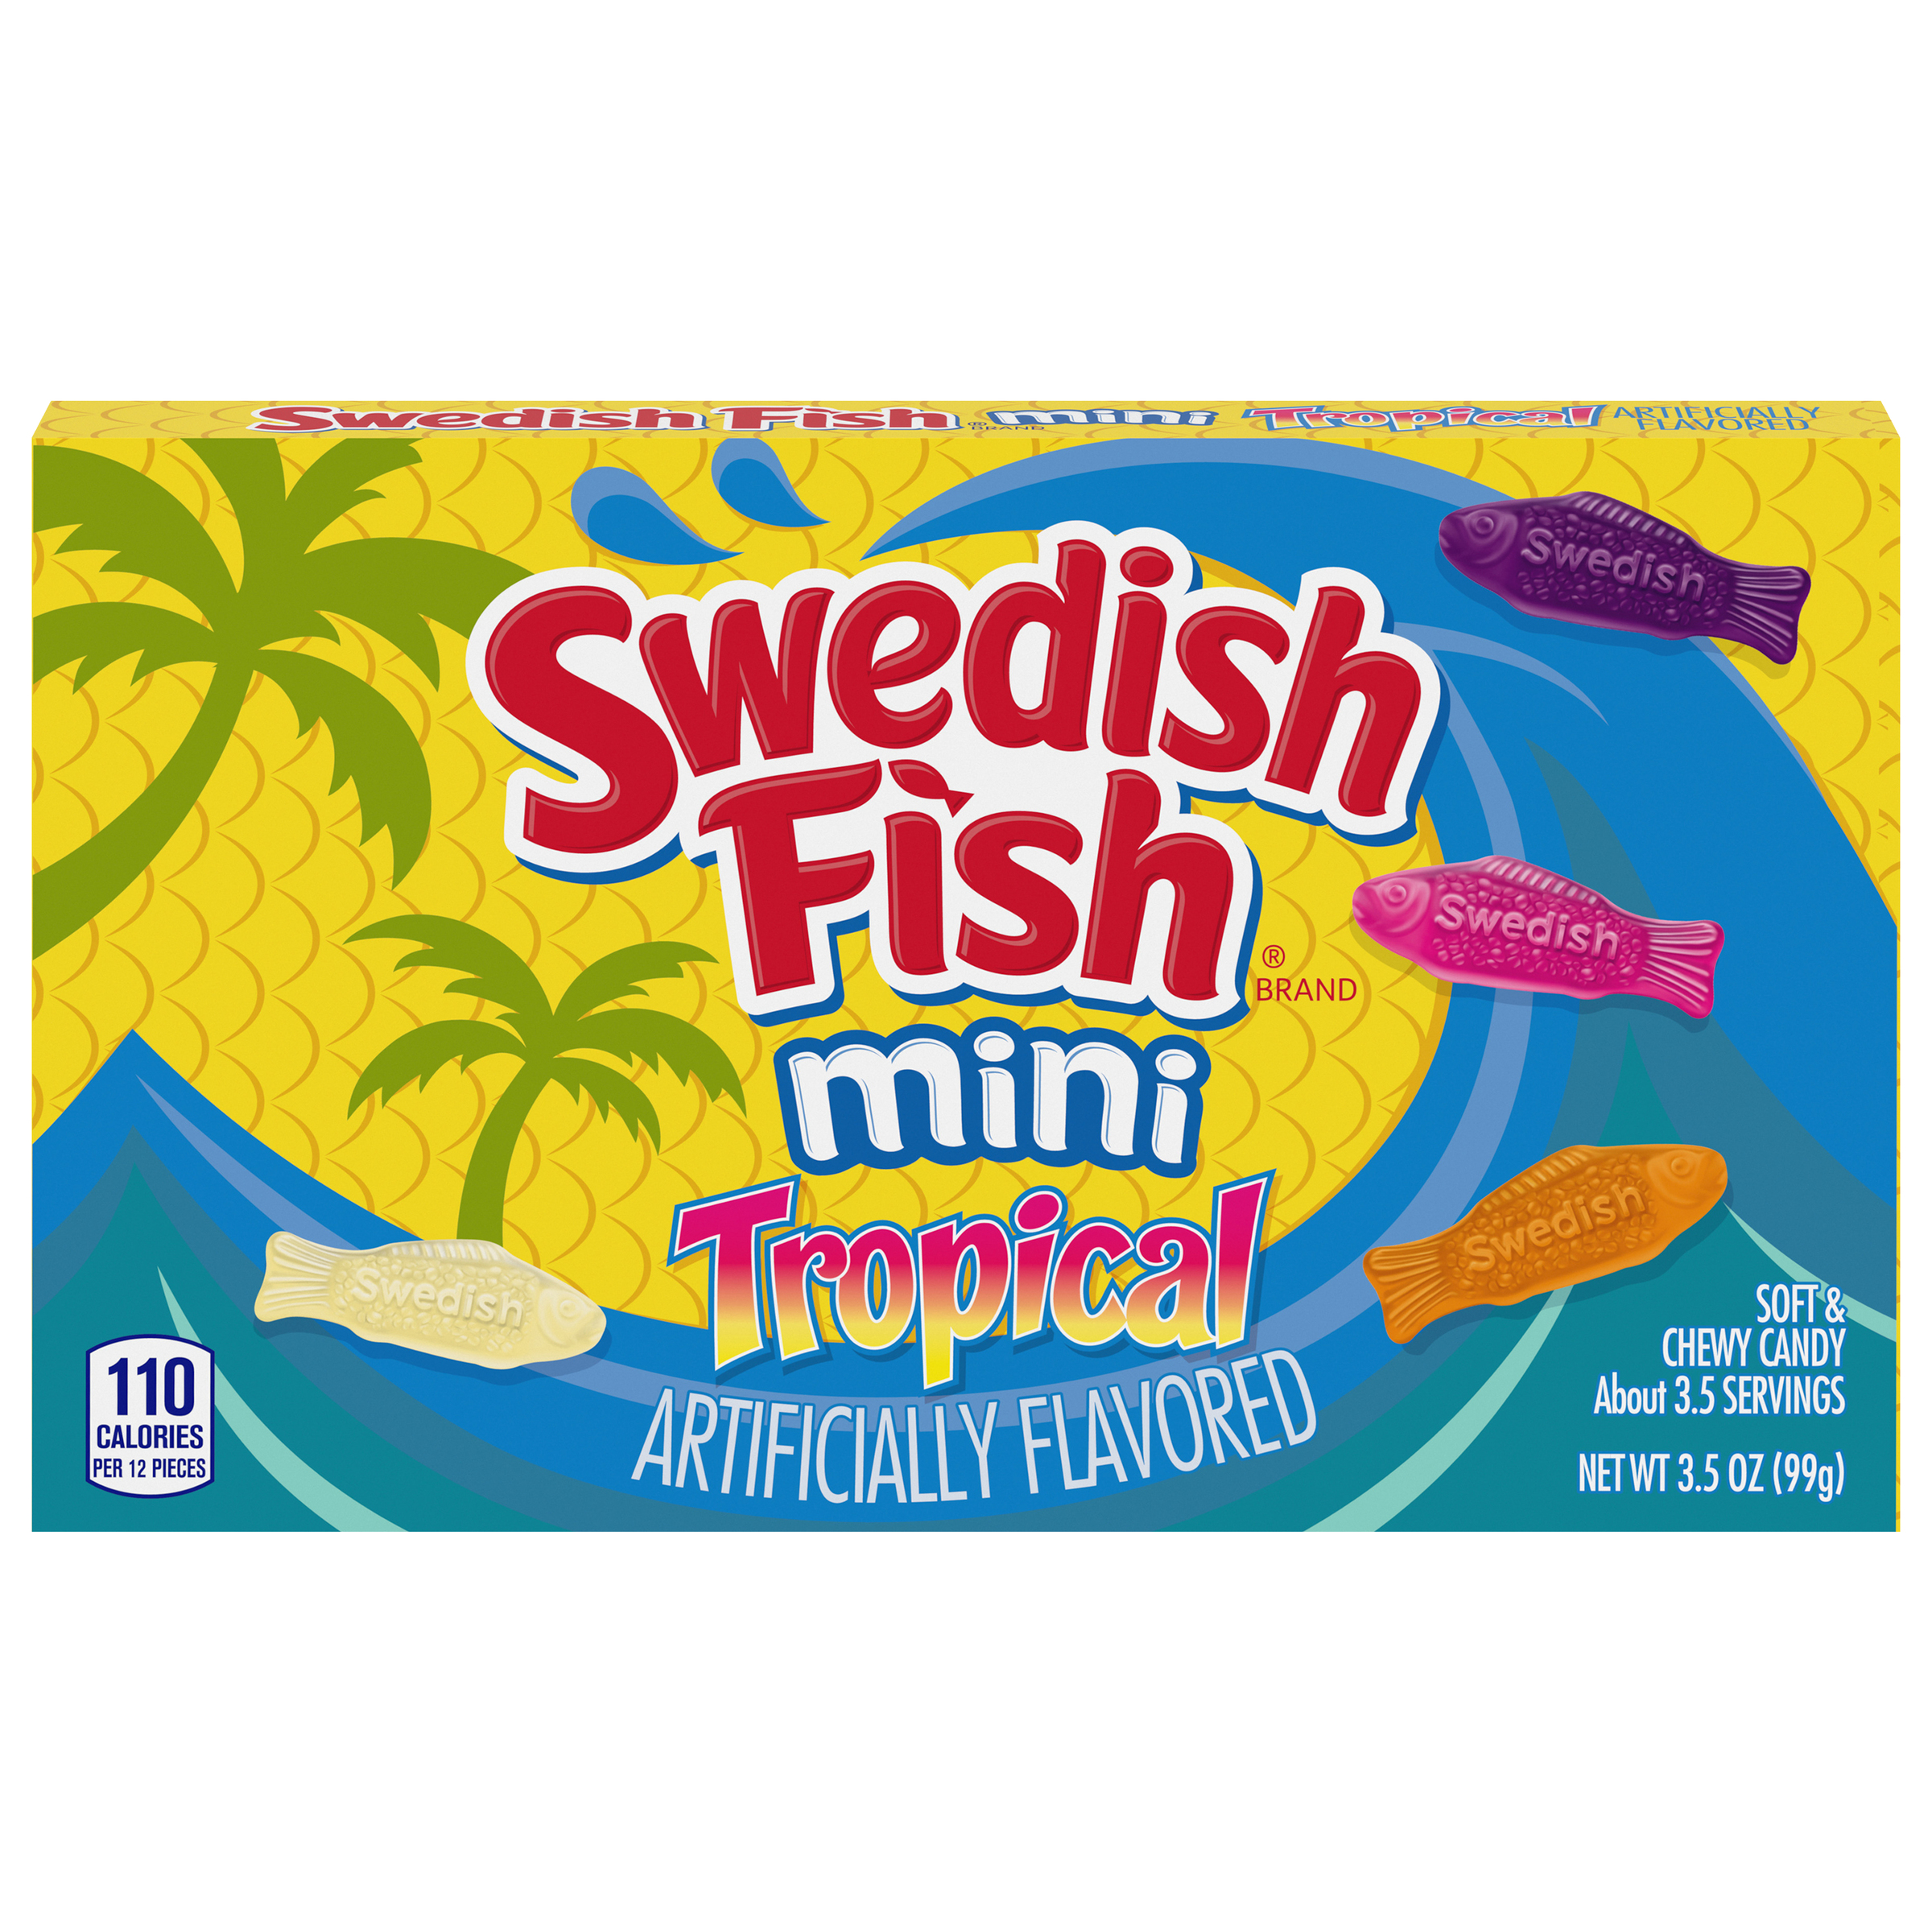 SWEDISH FISH Mini Tropical Soft & Chewy Candy, 3.5 oz